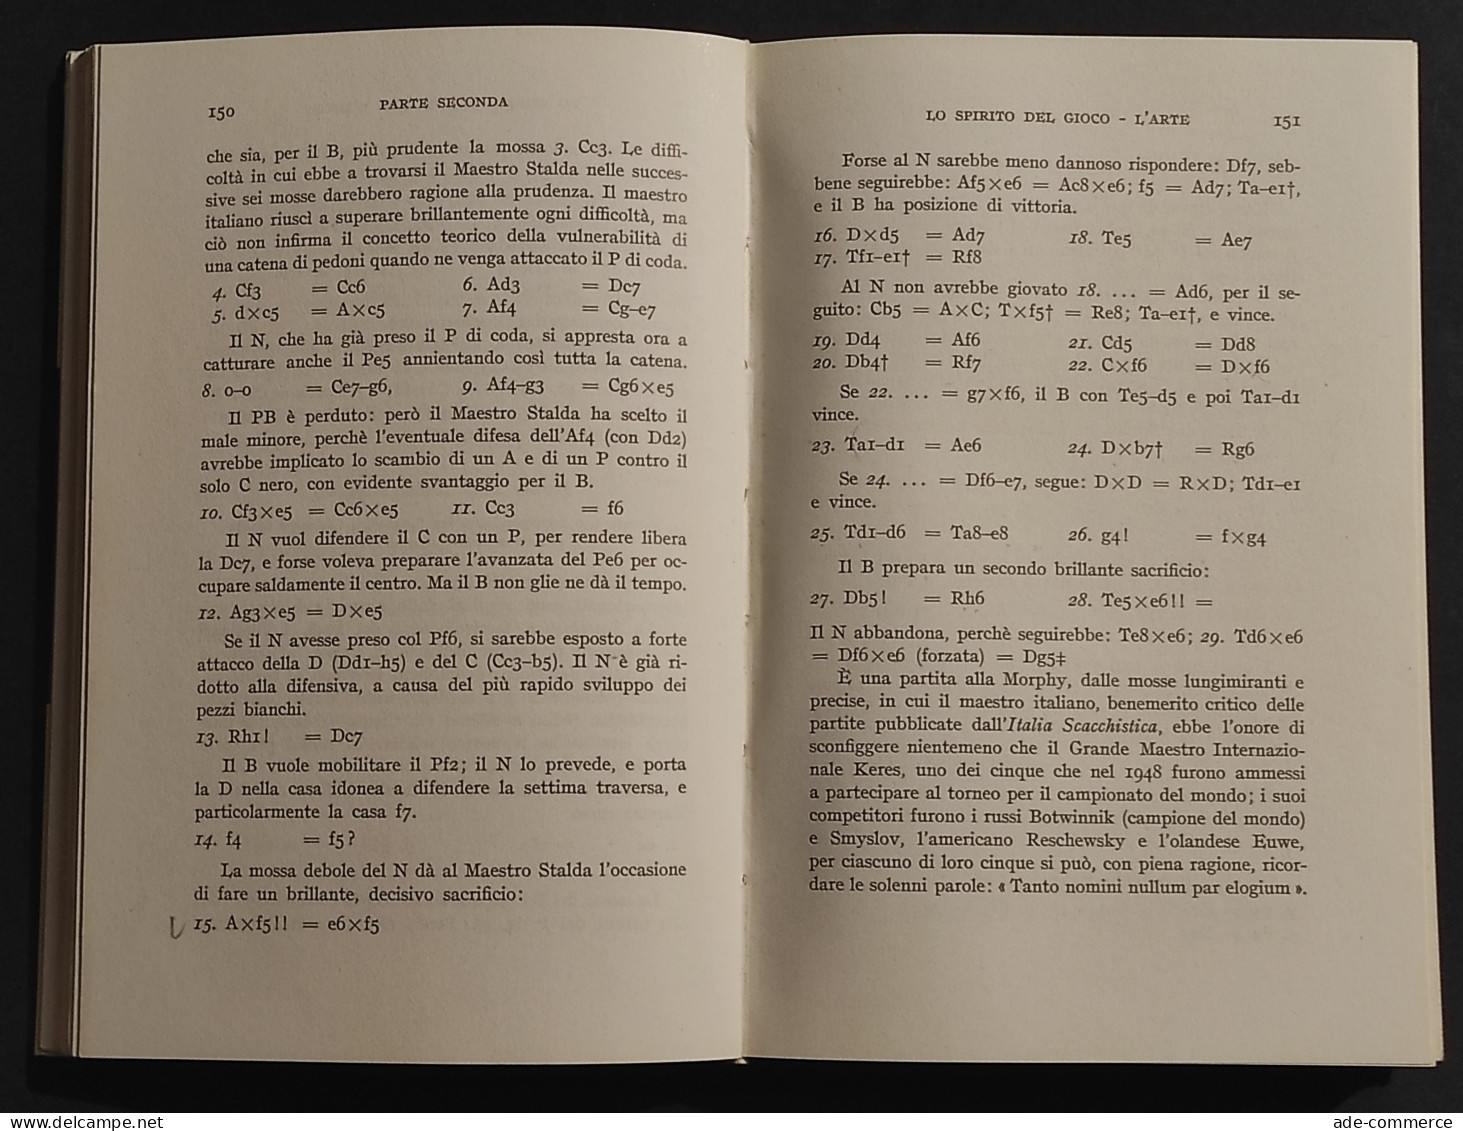 ABC Degli Scacchi - U. Pasquinelli - Ed. Hoepli - XI Ed. - Manuales Para Coleccionistas